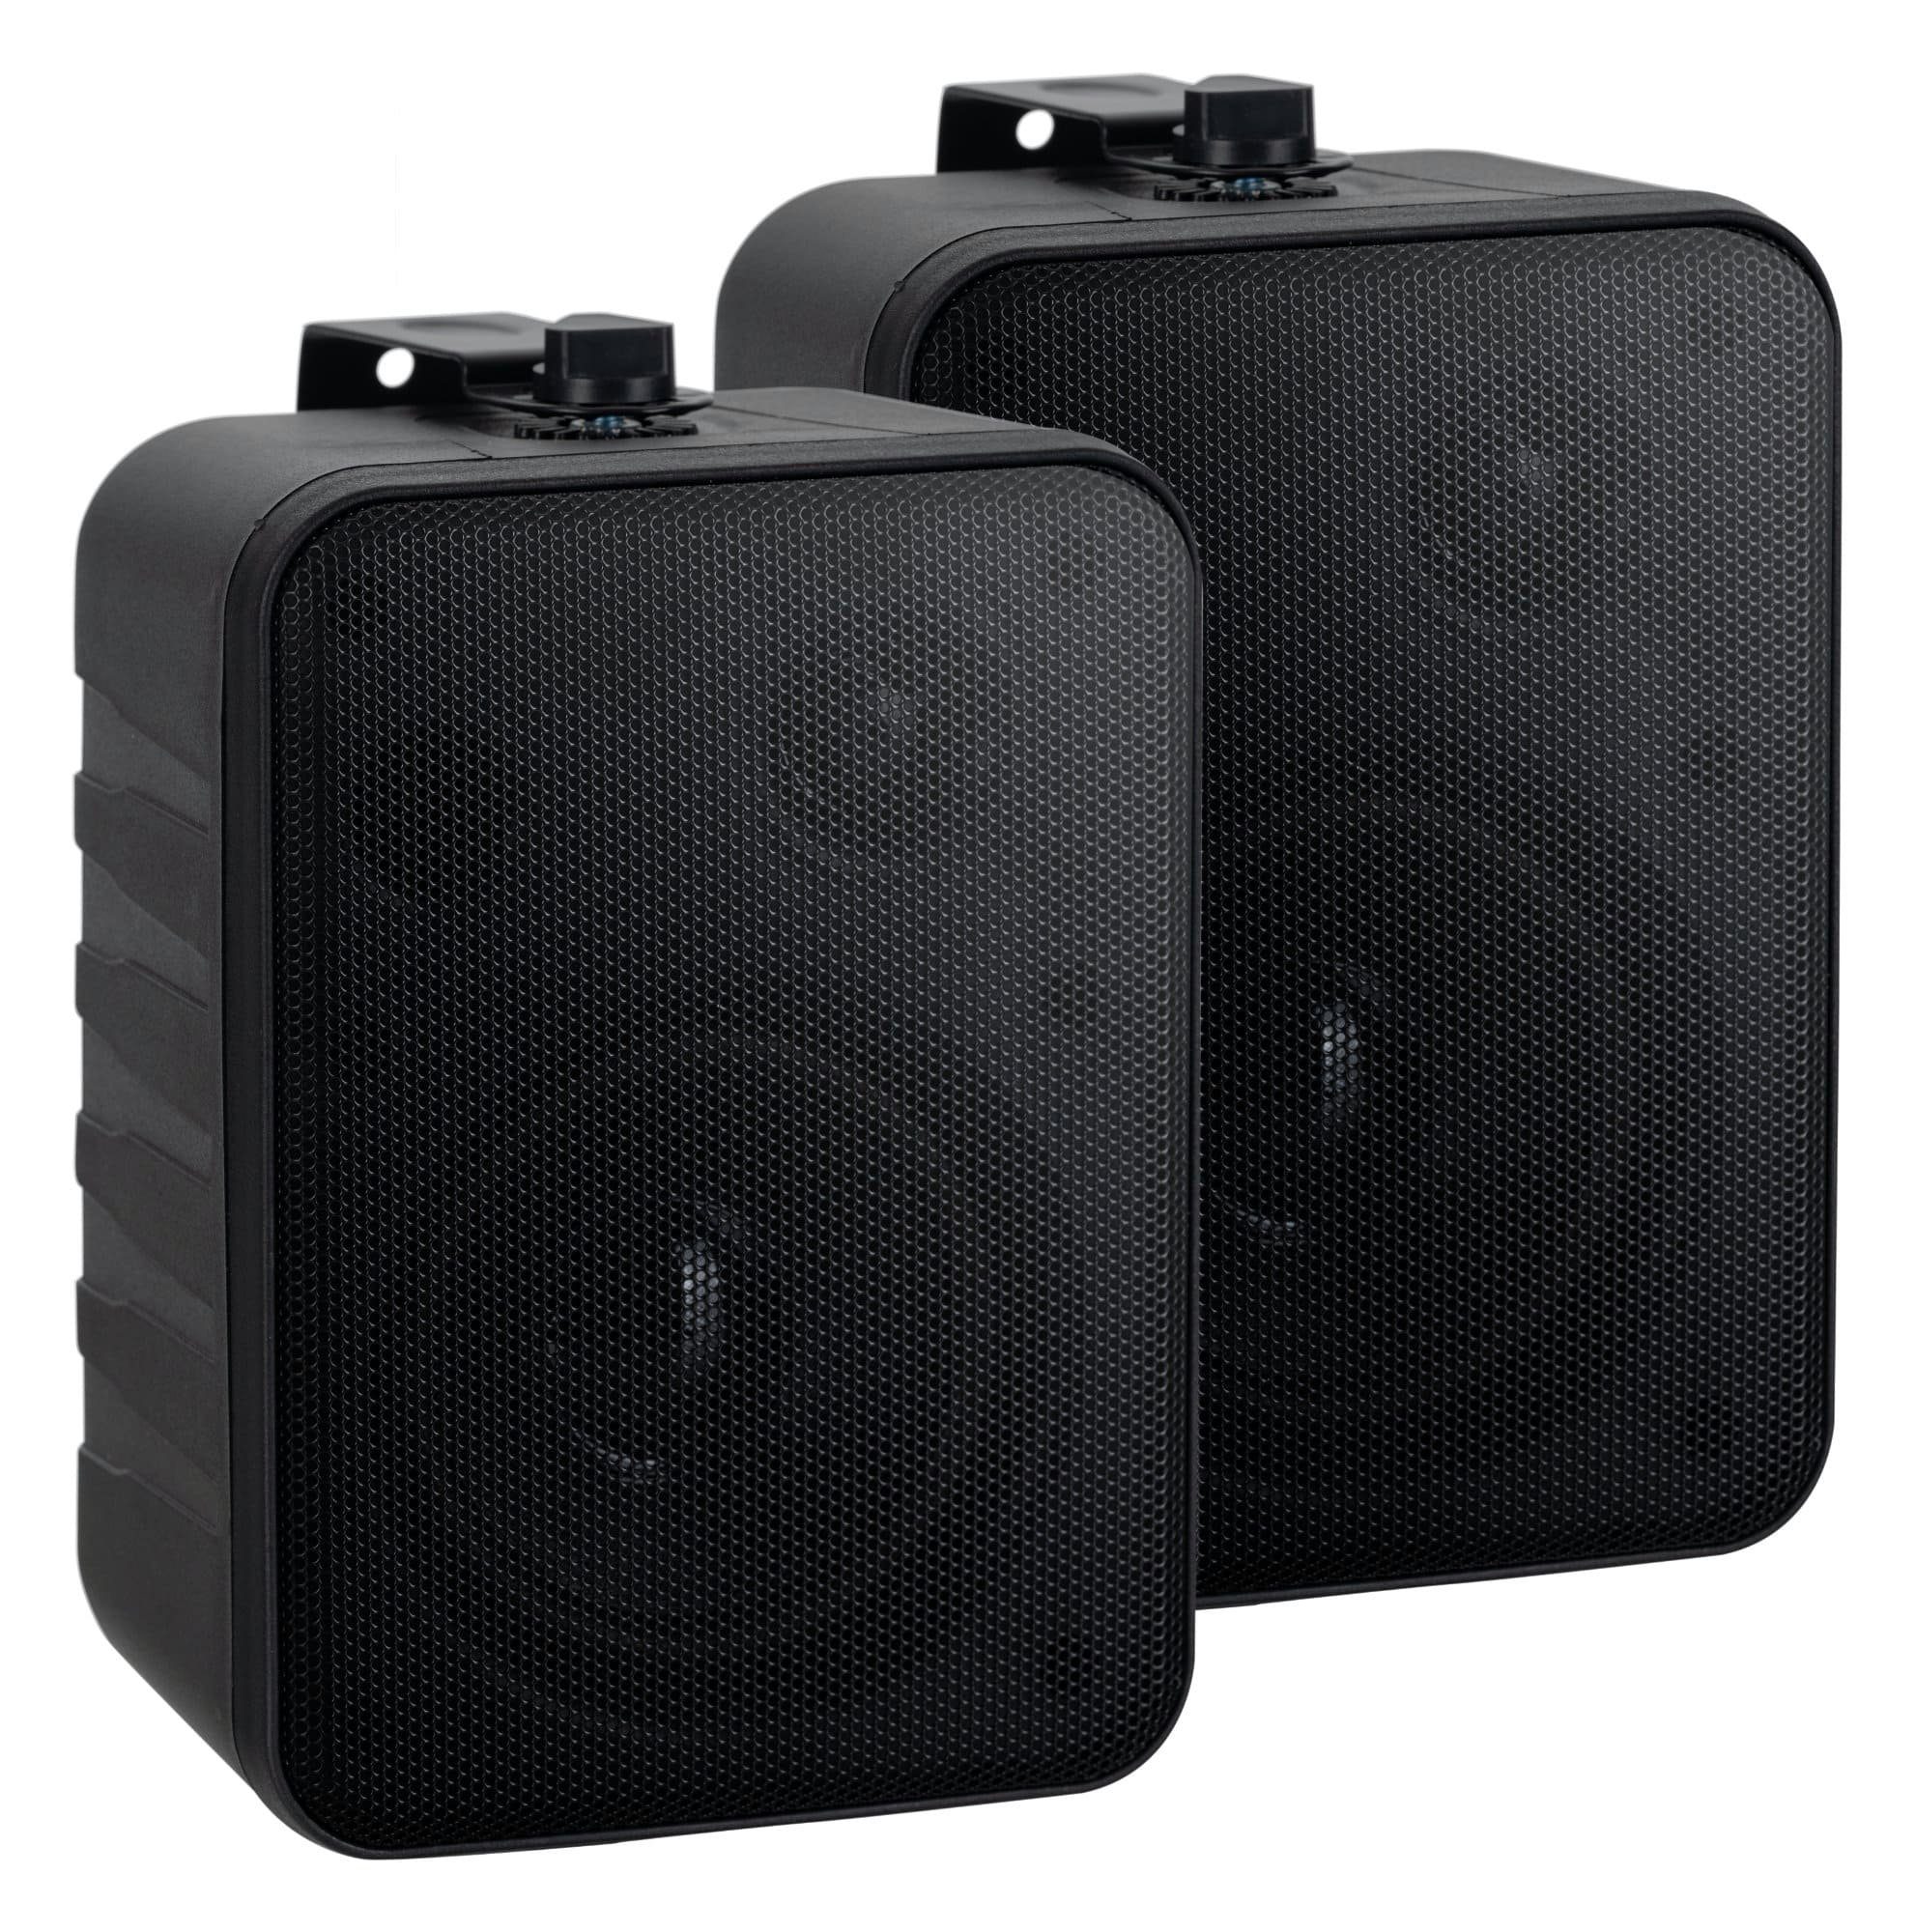 McGrey One Control MKIII HiFi-Lautsprecher - Lautsprecherboxen paar Lautsprecher (10 W, Boxen für Installation, Studio oder HiFi-Anwendung) Schwarz